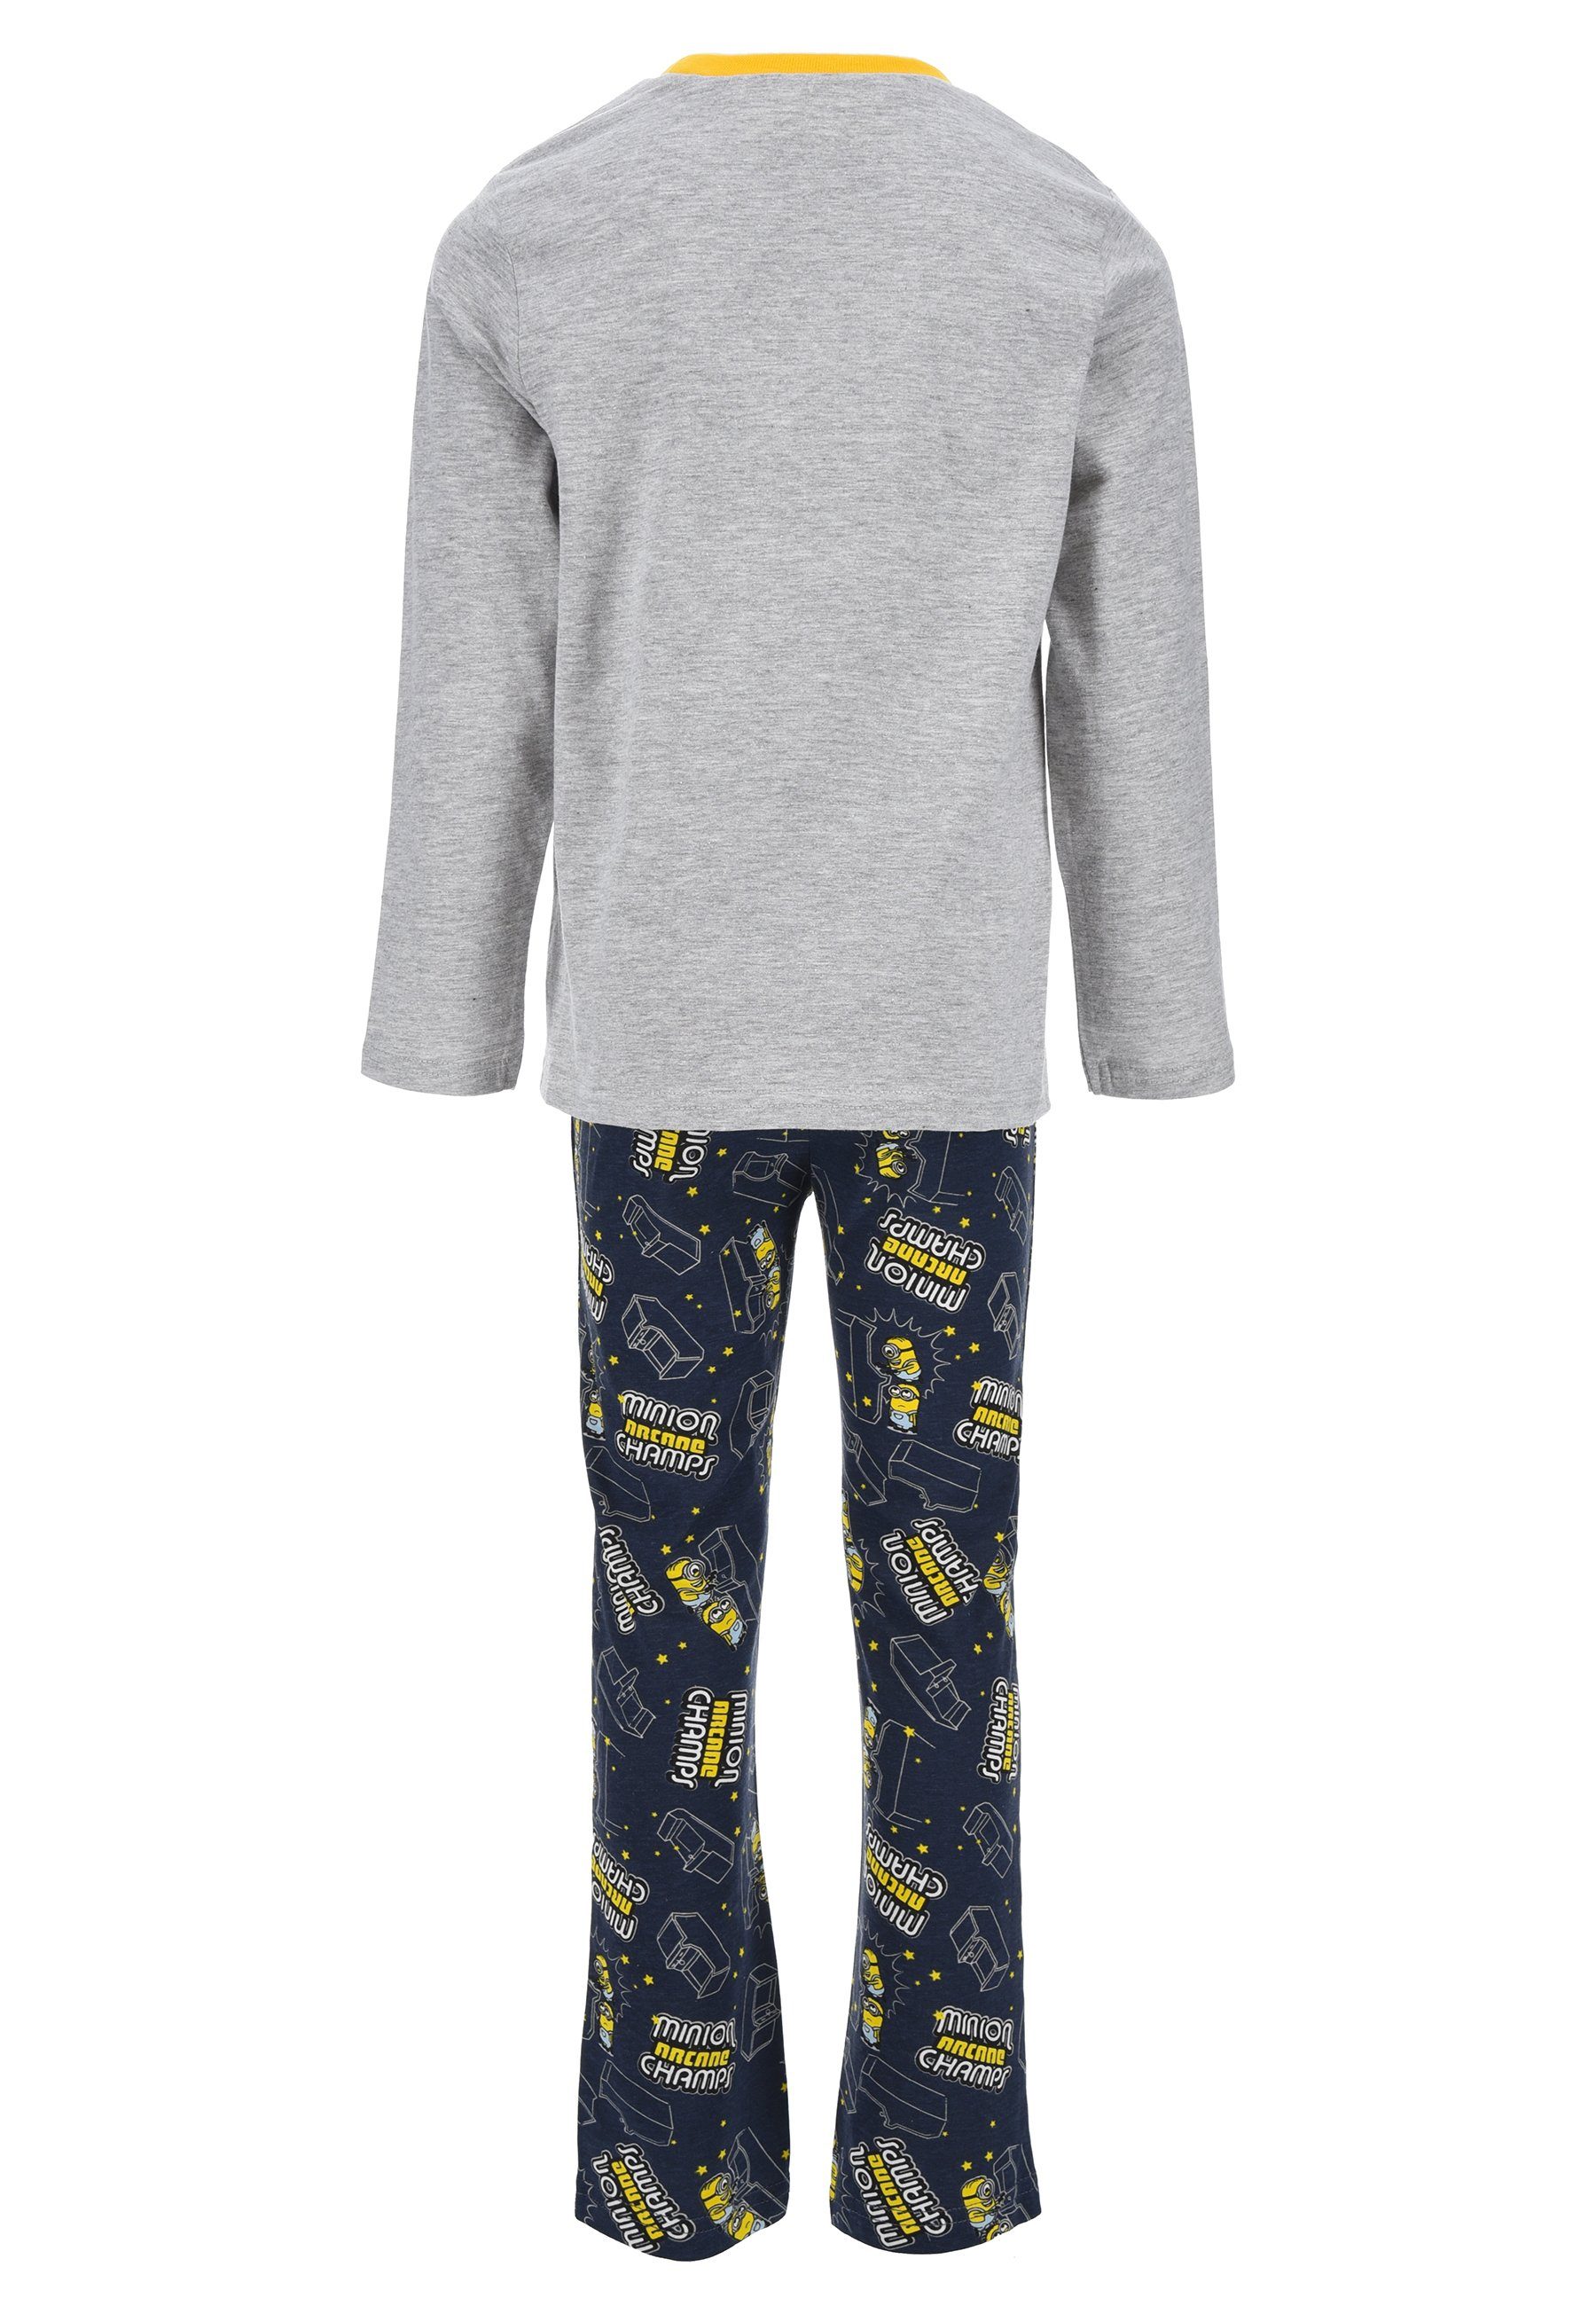 tlg) Jungen Minions Grau Kinder Pyjama Schlafanzug (2 Schlaf-set